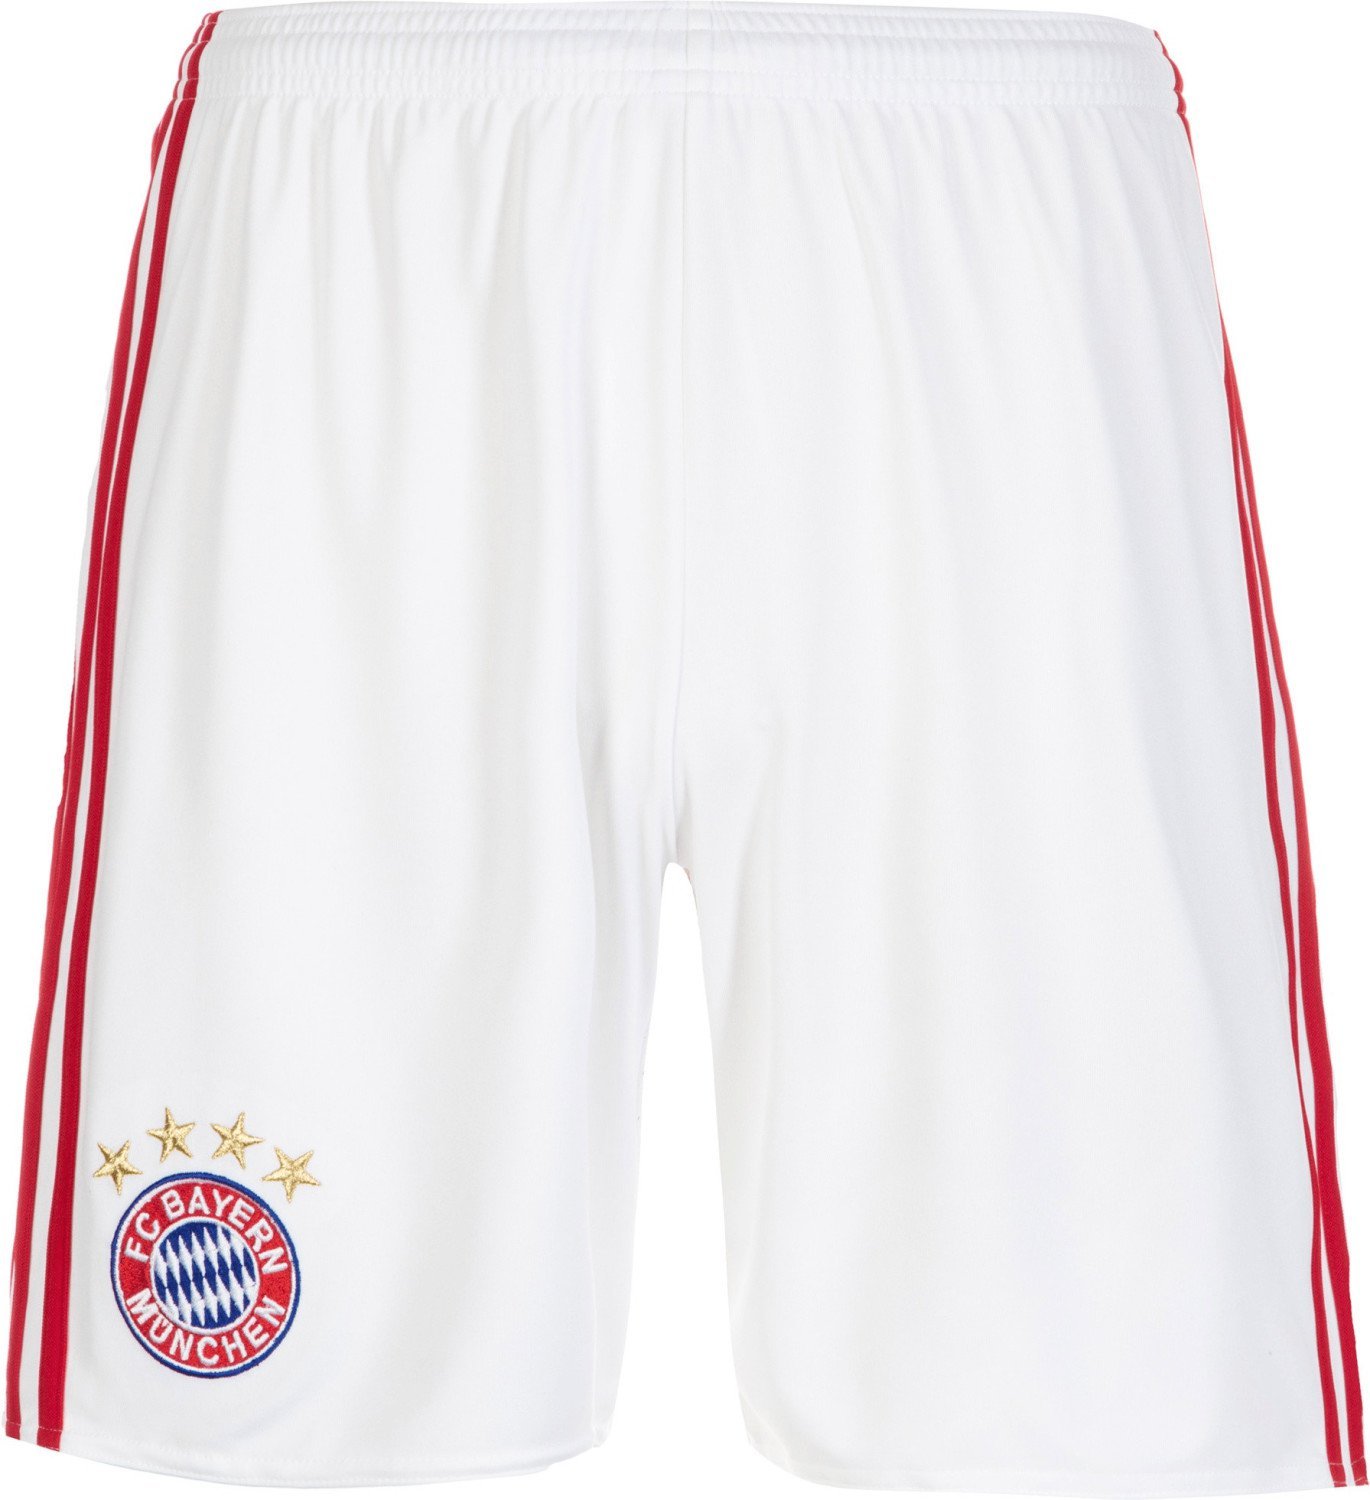 Adidas FC Bayern Shorts ab 18,99 € im Preisvergleich kaufen